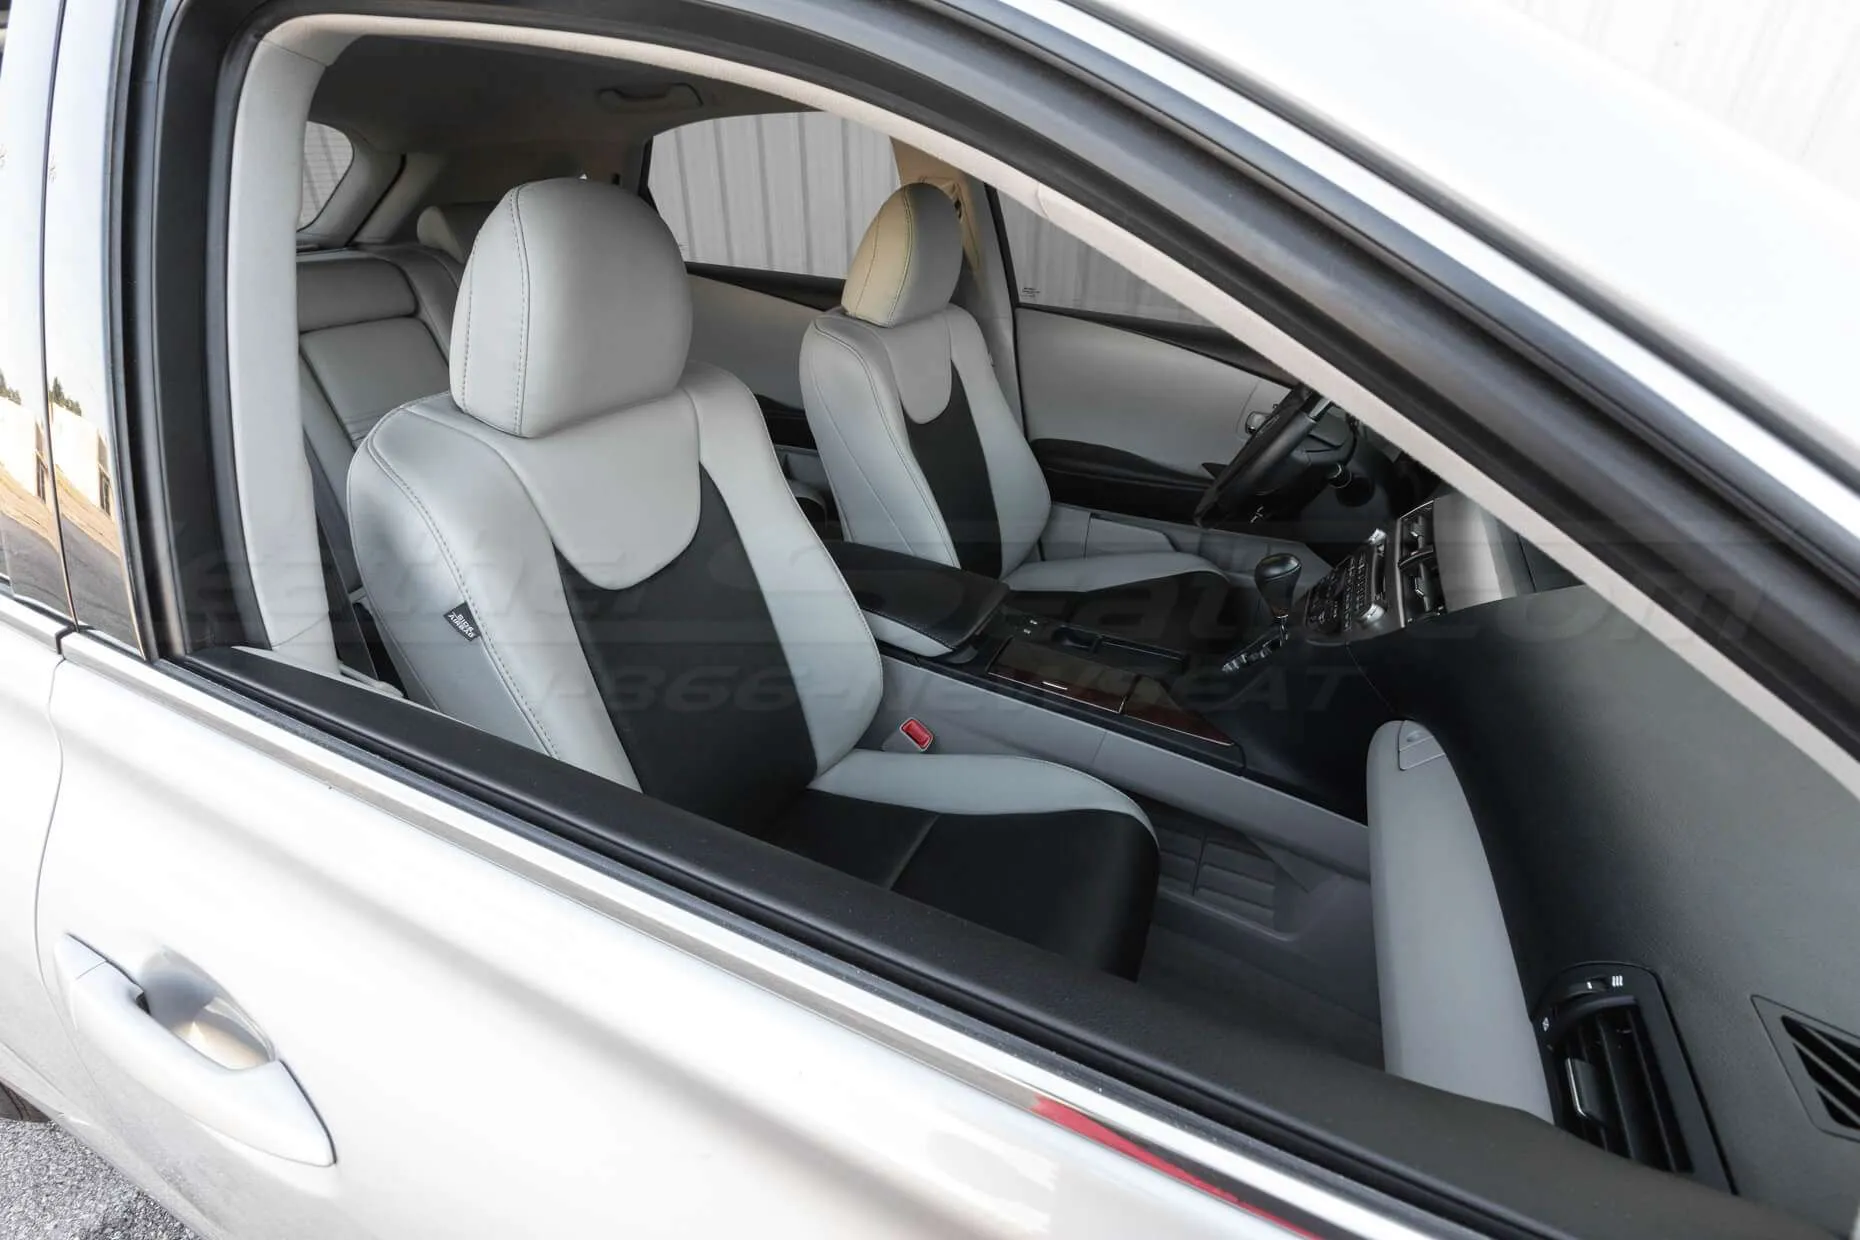 Lexus RX350 Leather Seats - Frost & Black - Interior through window view